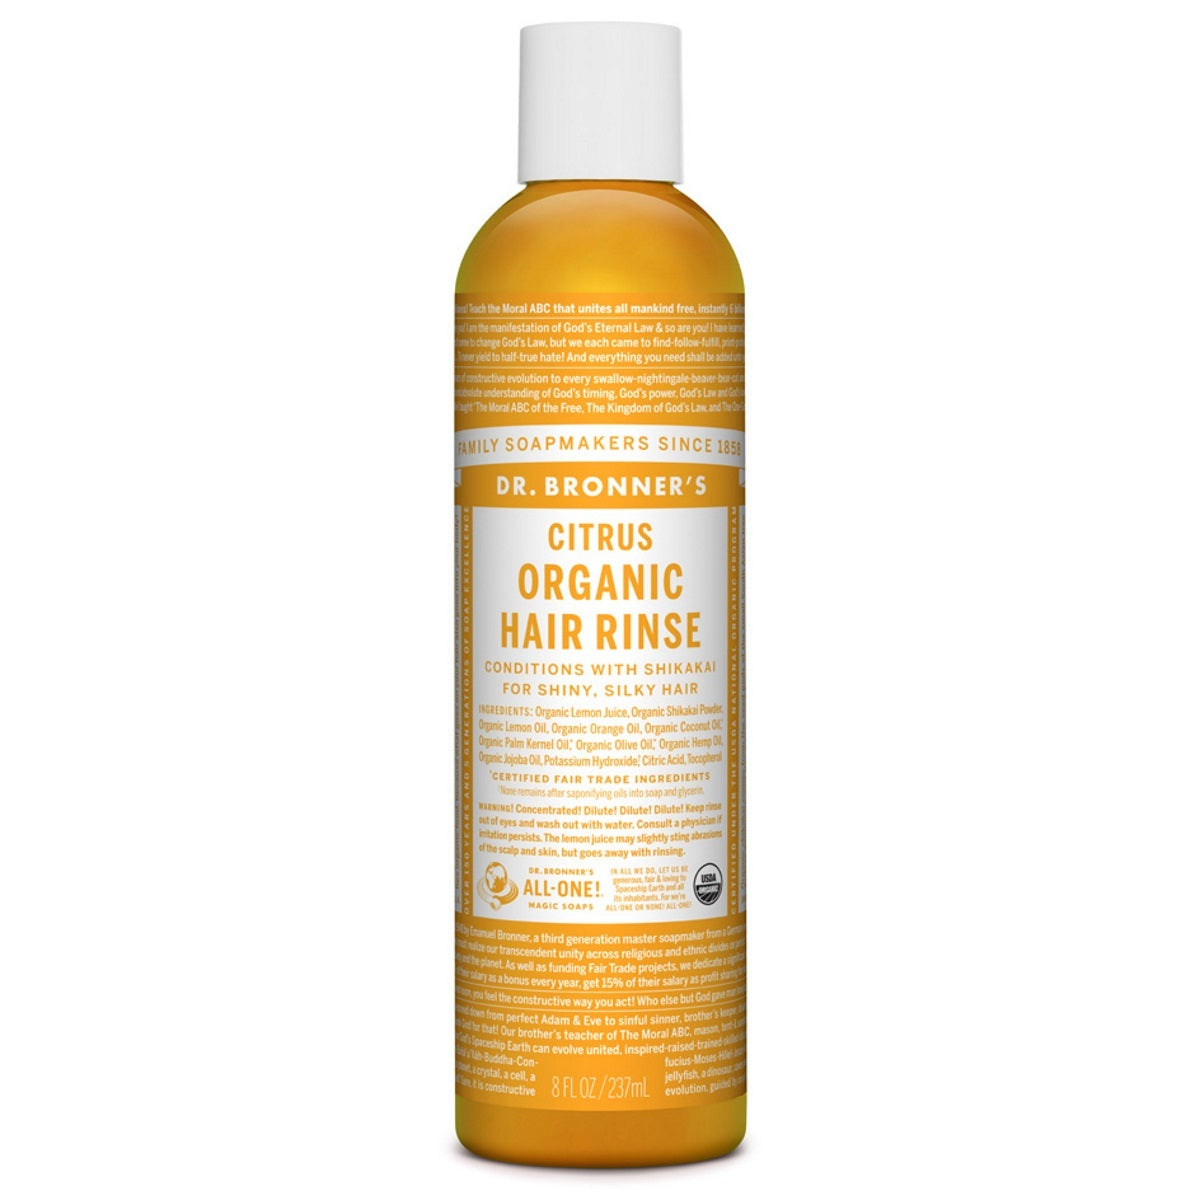 Primary image of Citrus Organic Hair Rinse